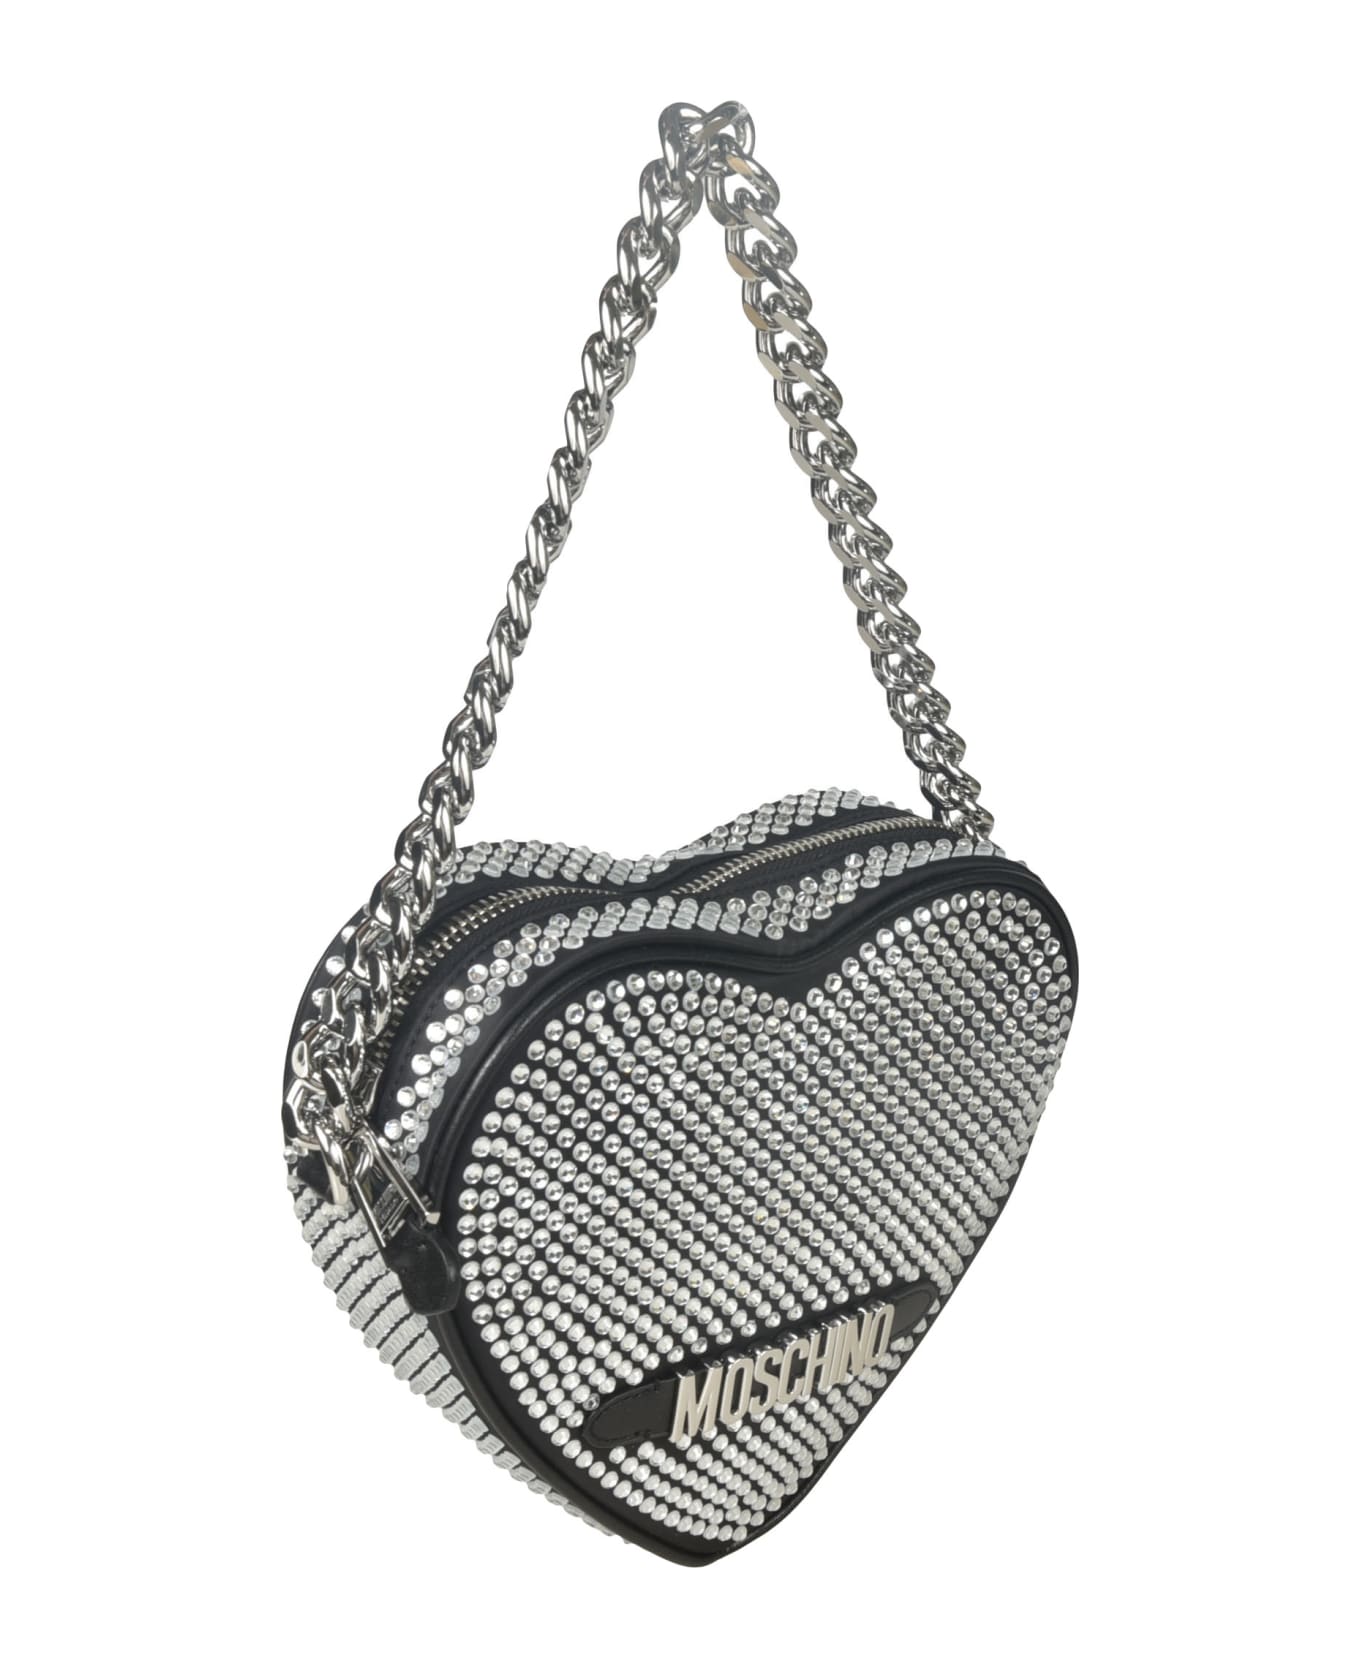 Moschino Heart Embellished Chain Shoulder Bag Moschino - BLACK